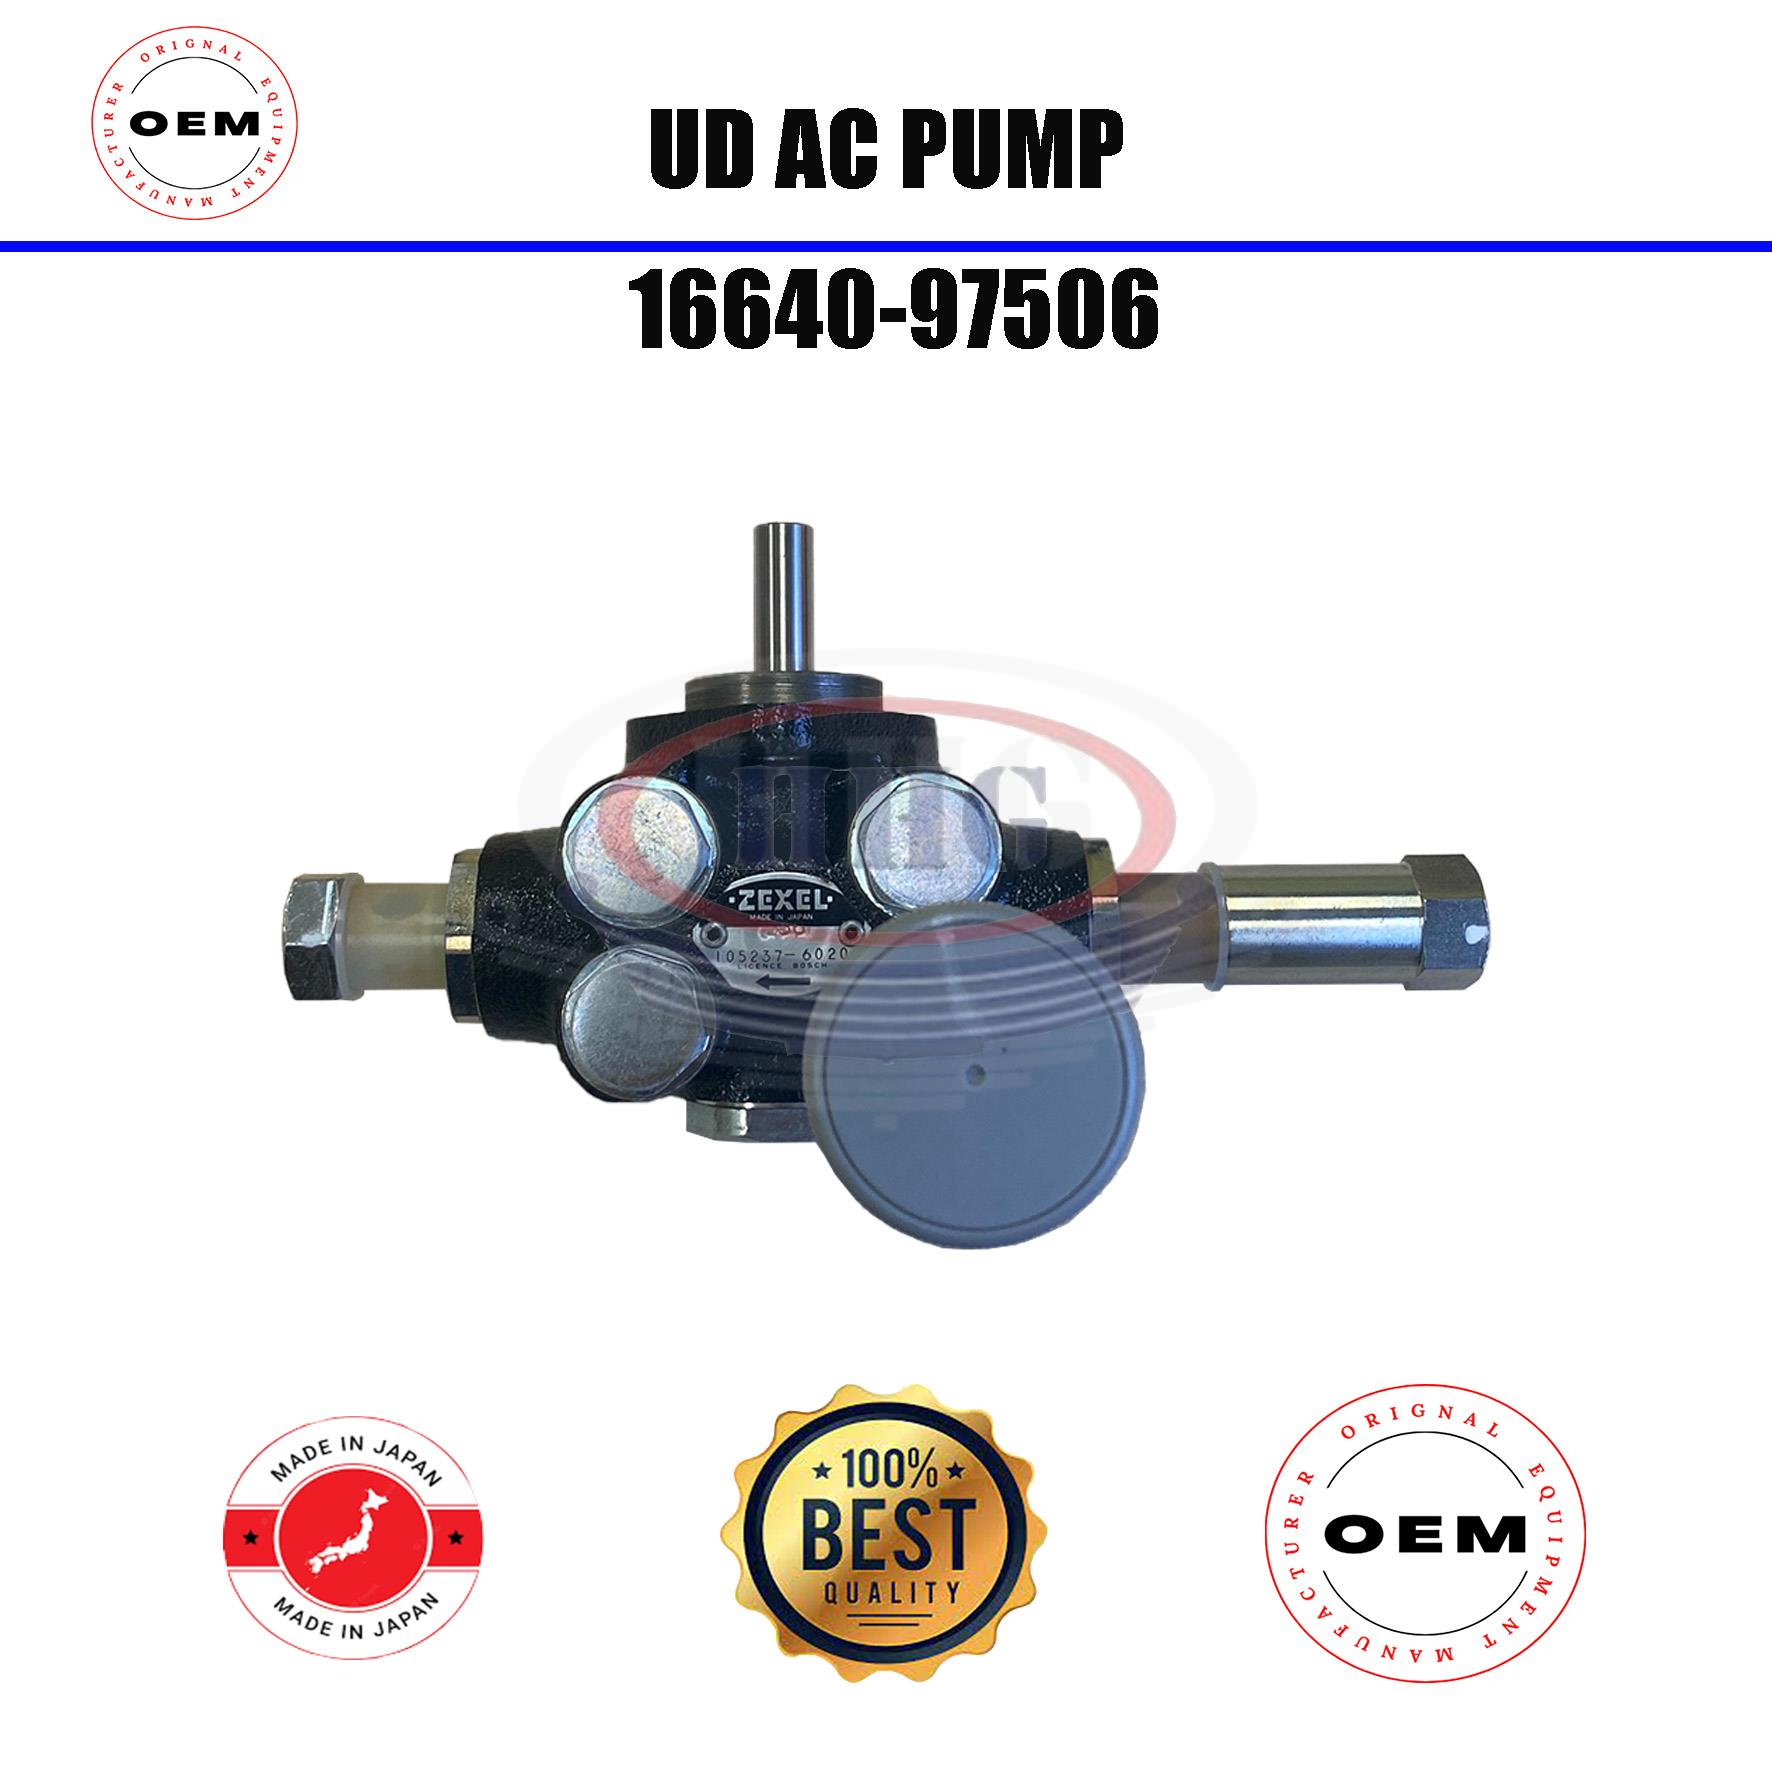 OEM UD RG8 RH8 AC Pump (16640-97506)